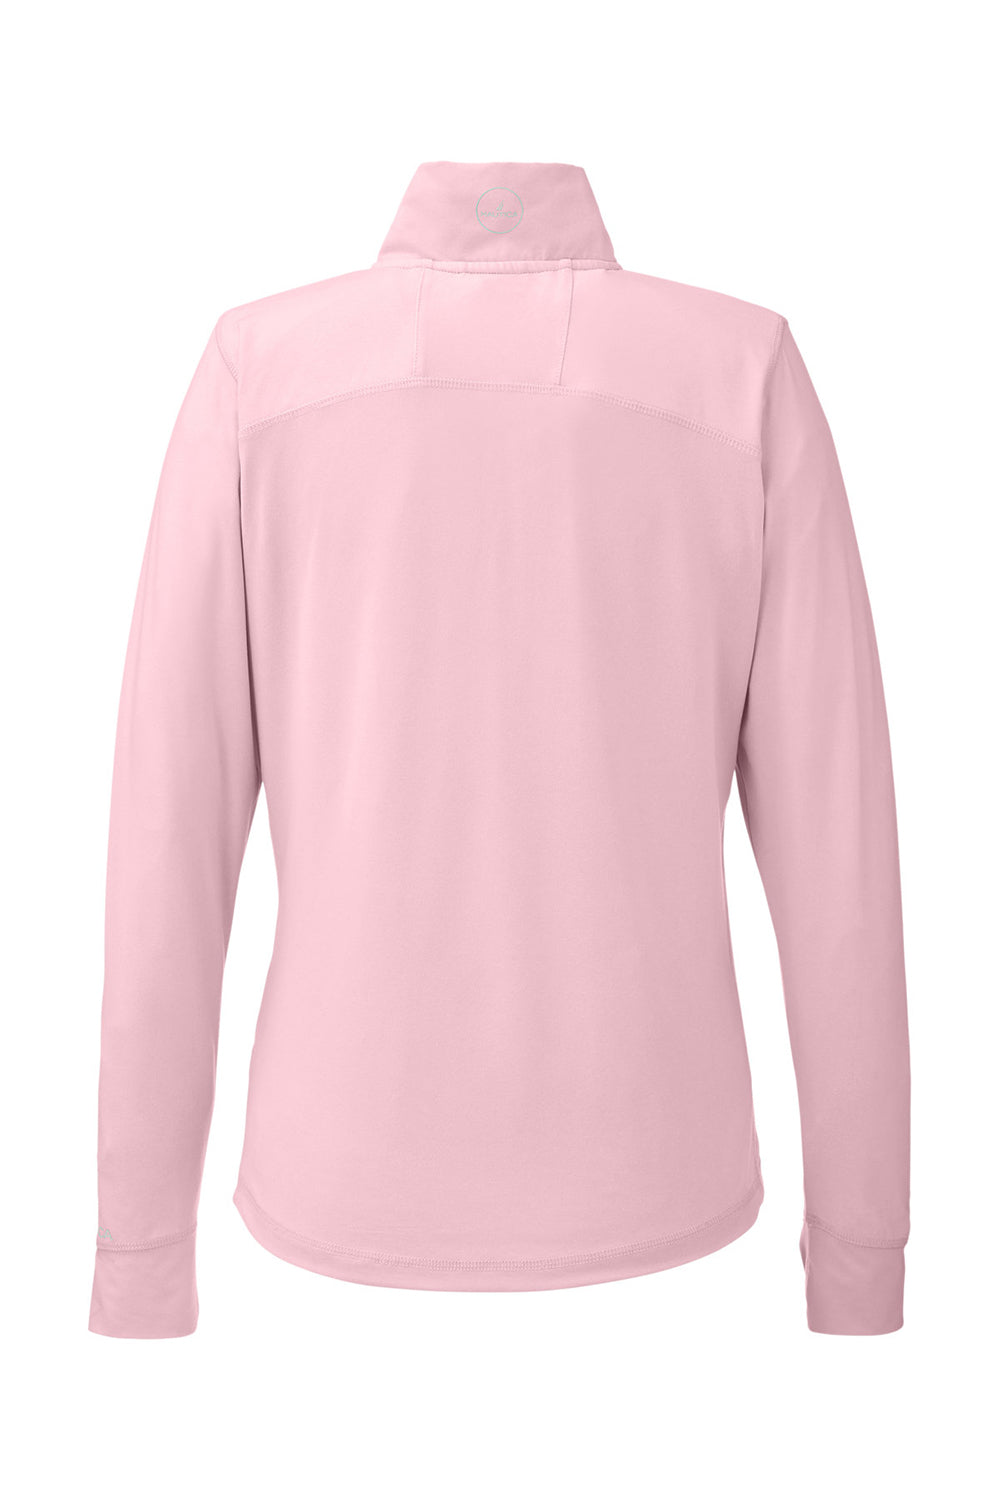 Nautica N17925 Womens Saltwater 1/4 Zip Sweatshirt Sunset Pink Flat Back